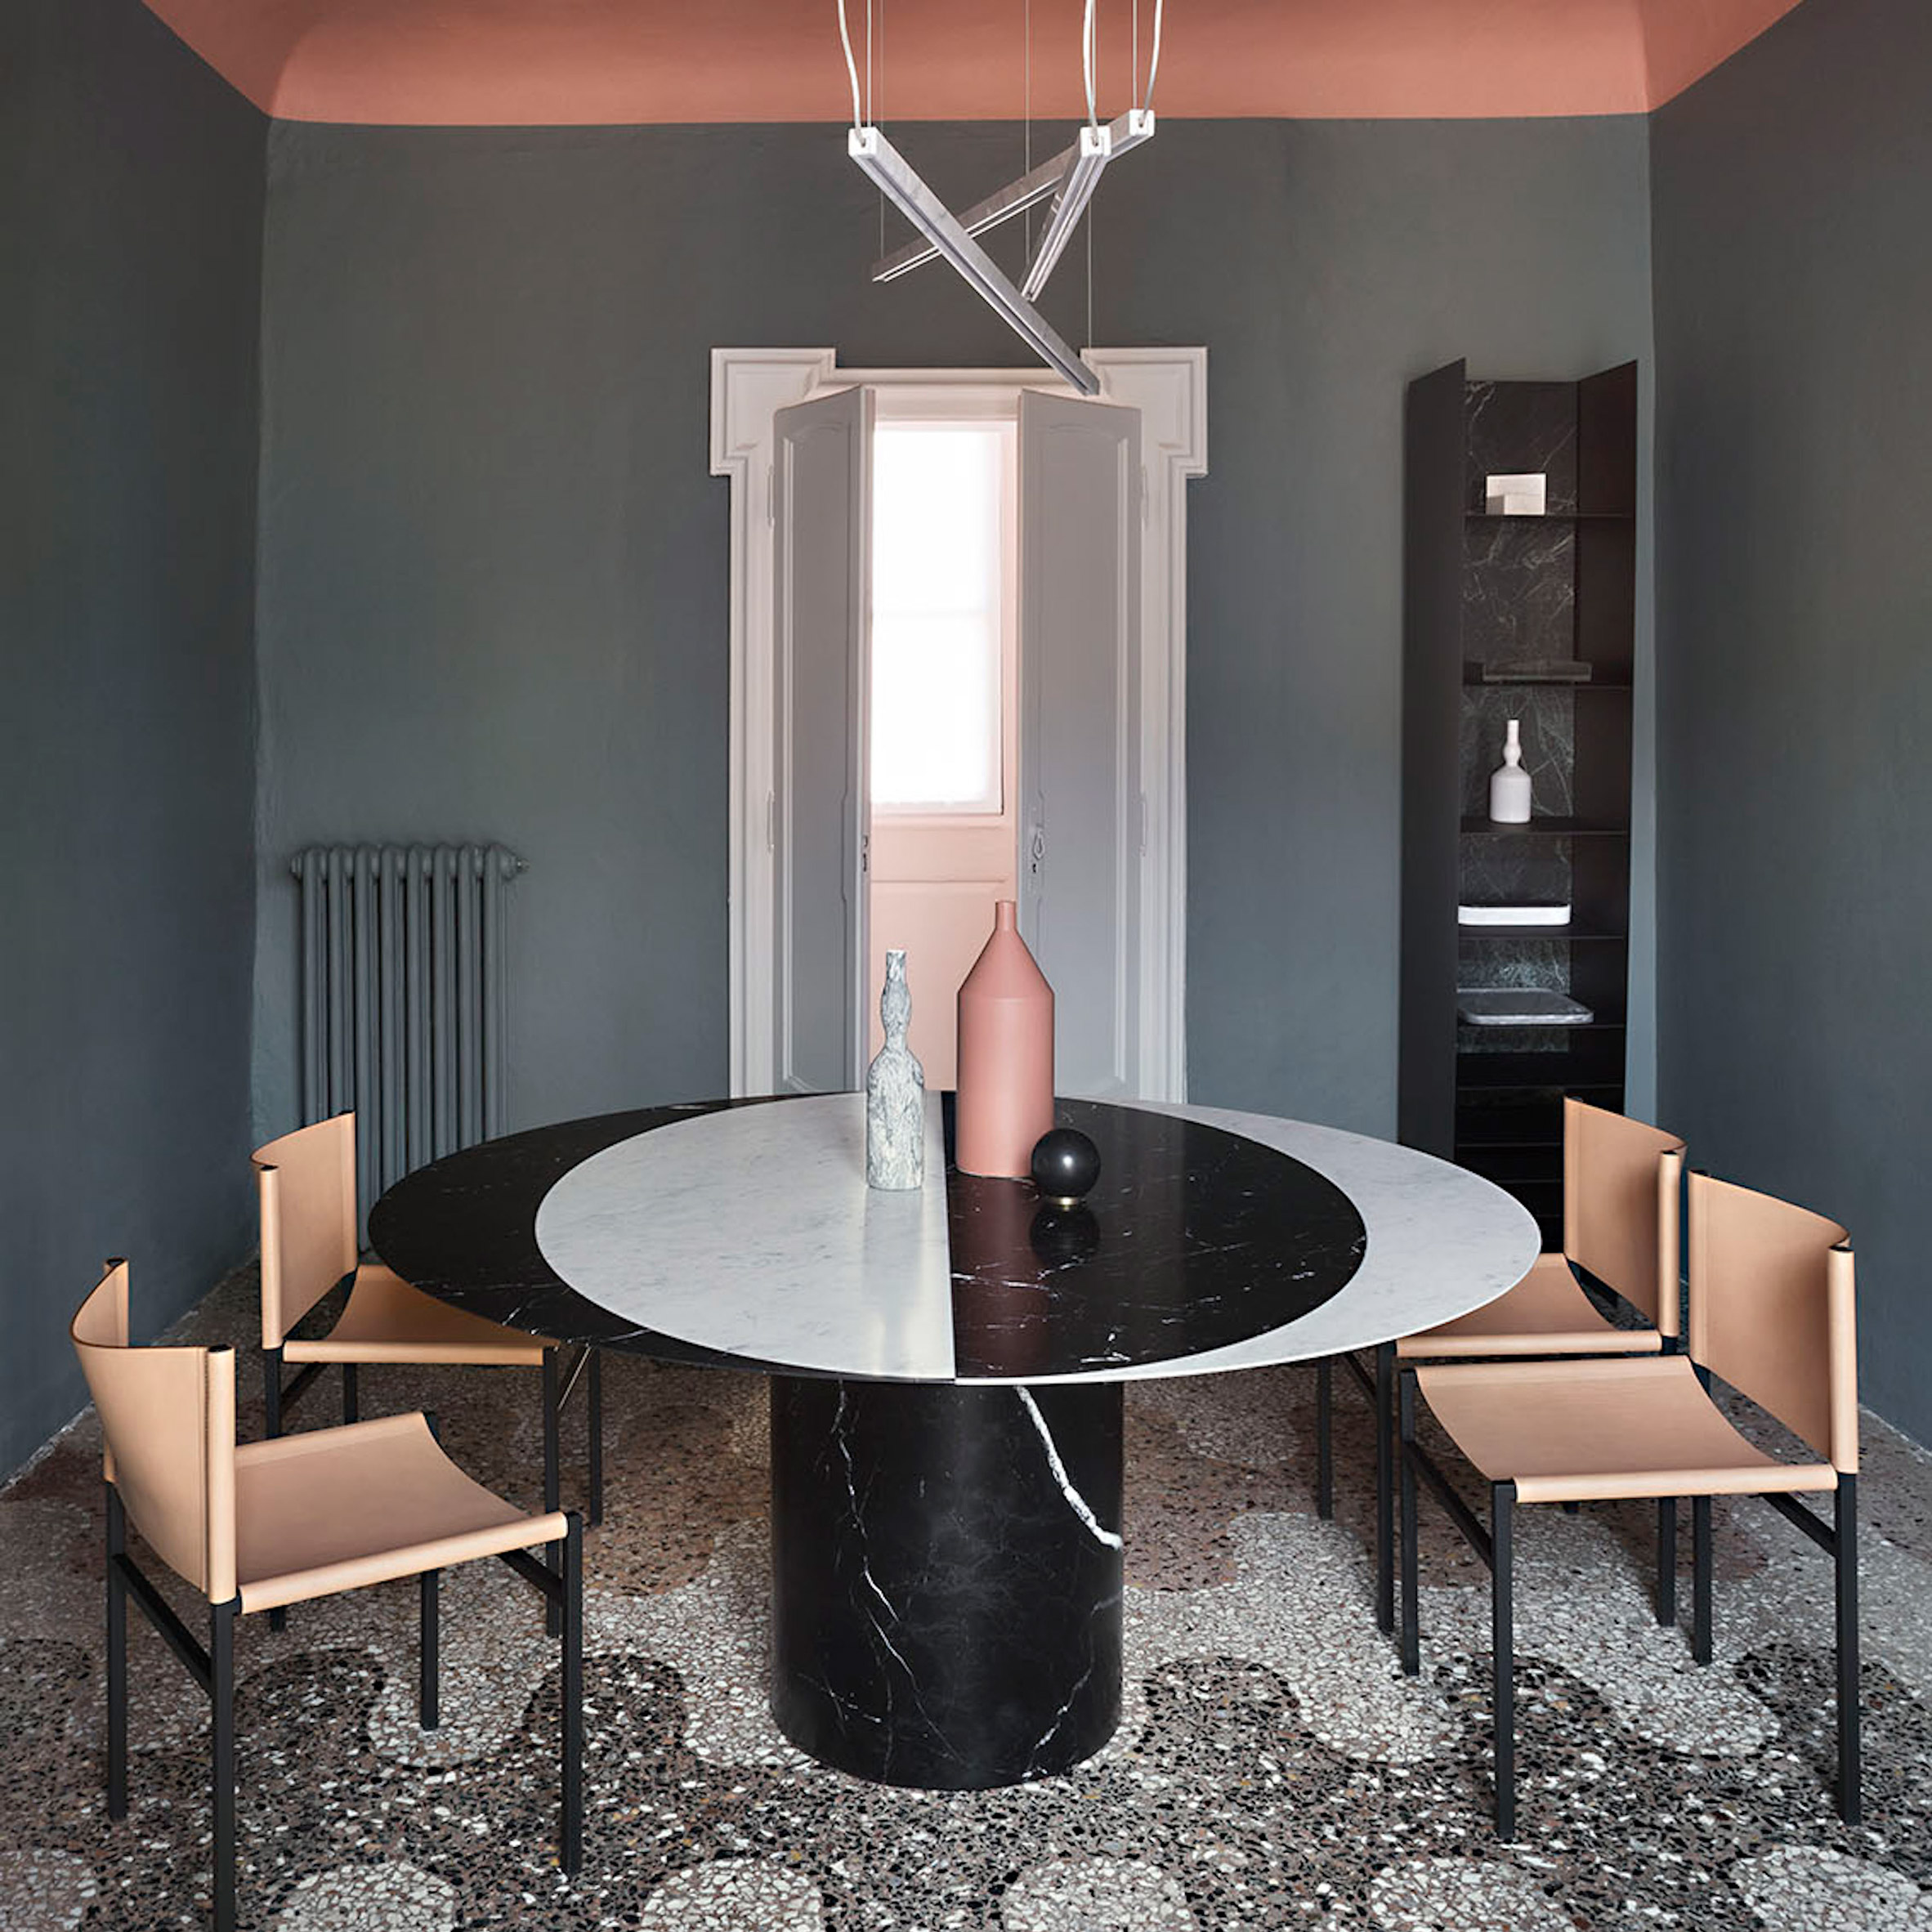 Casa Salvatori in Milan pairs marble furnishings with flecked